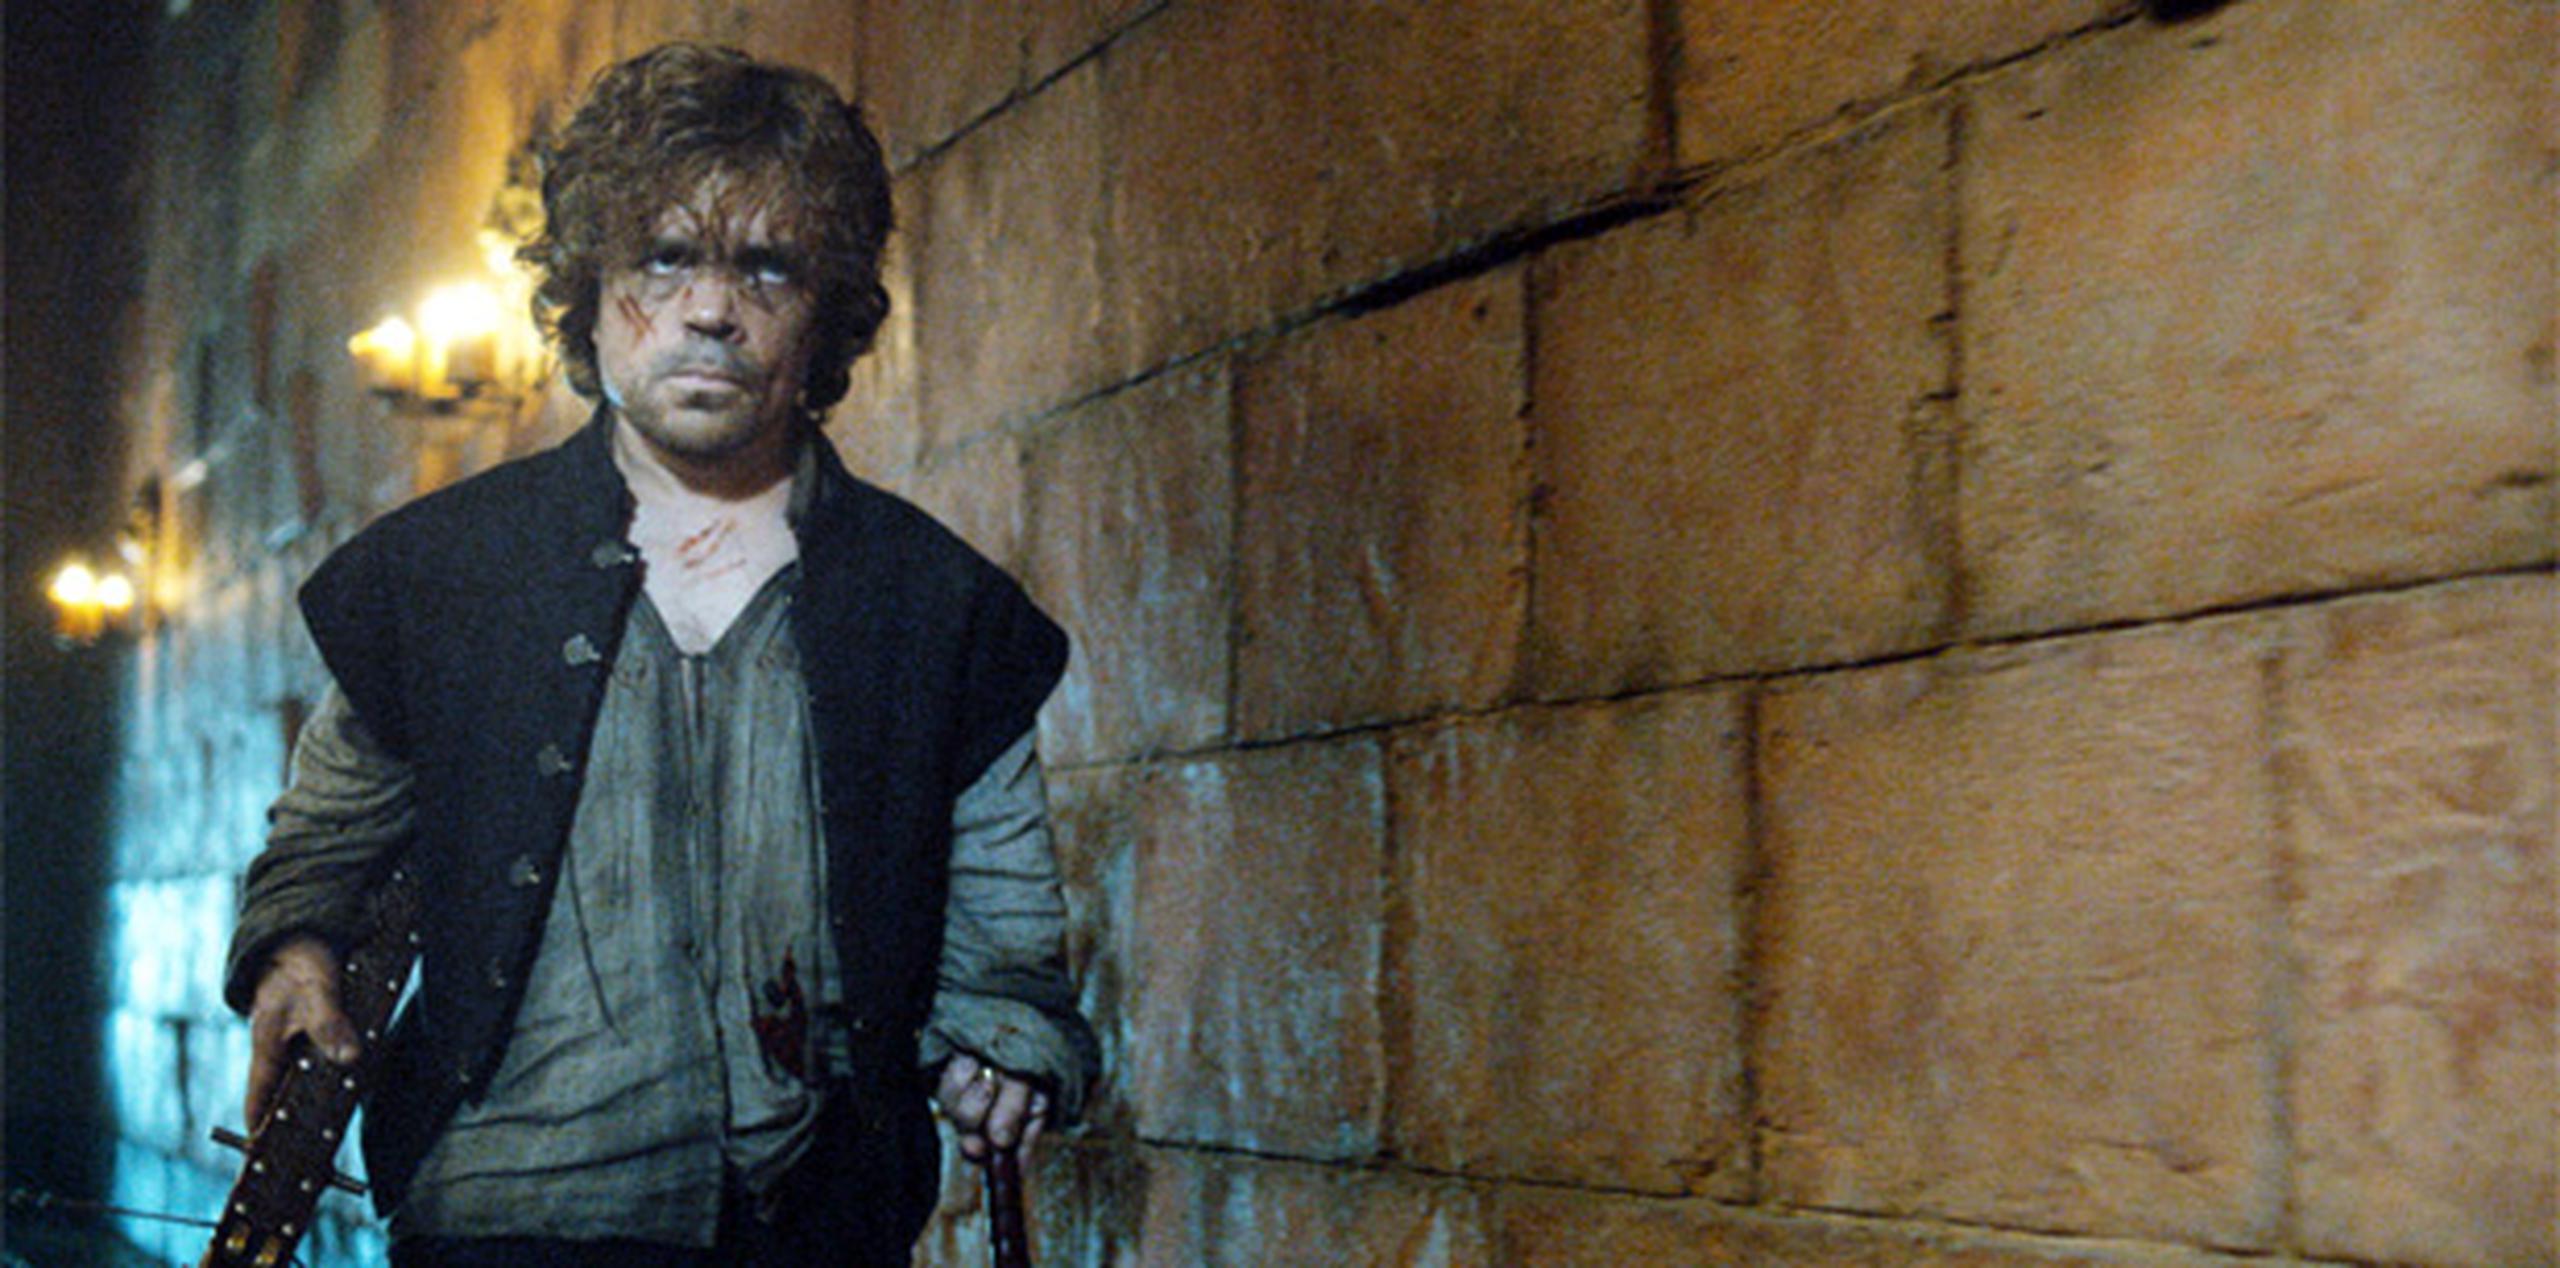 Peter Dinklage interpreta a "Tyrion Lannister" en la popular serie de HBO.